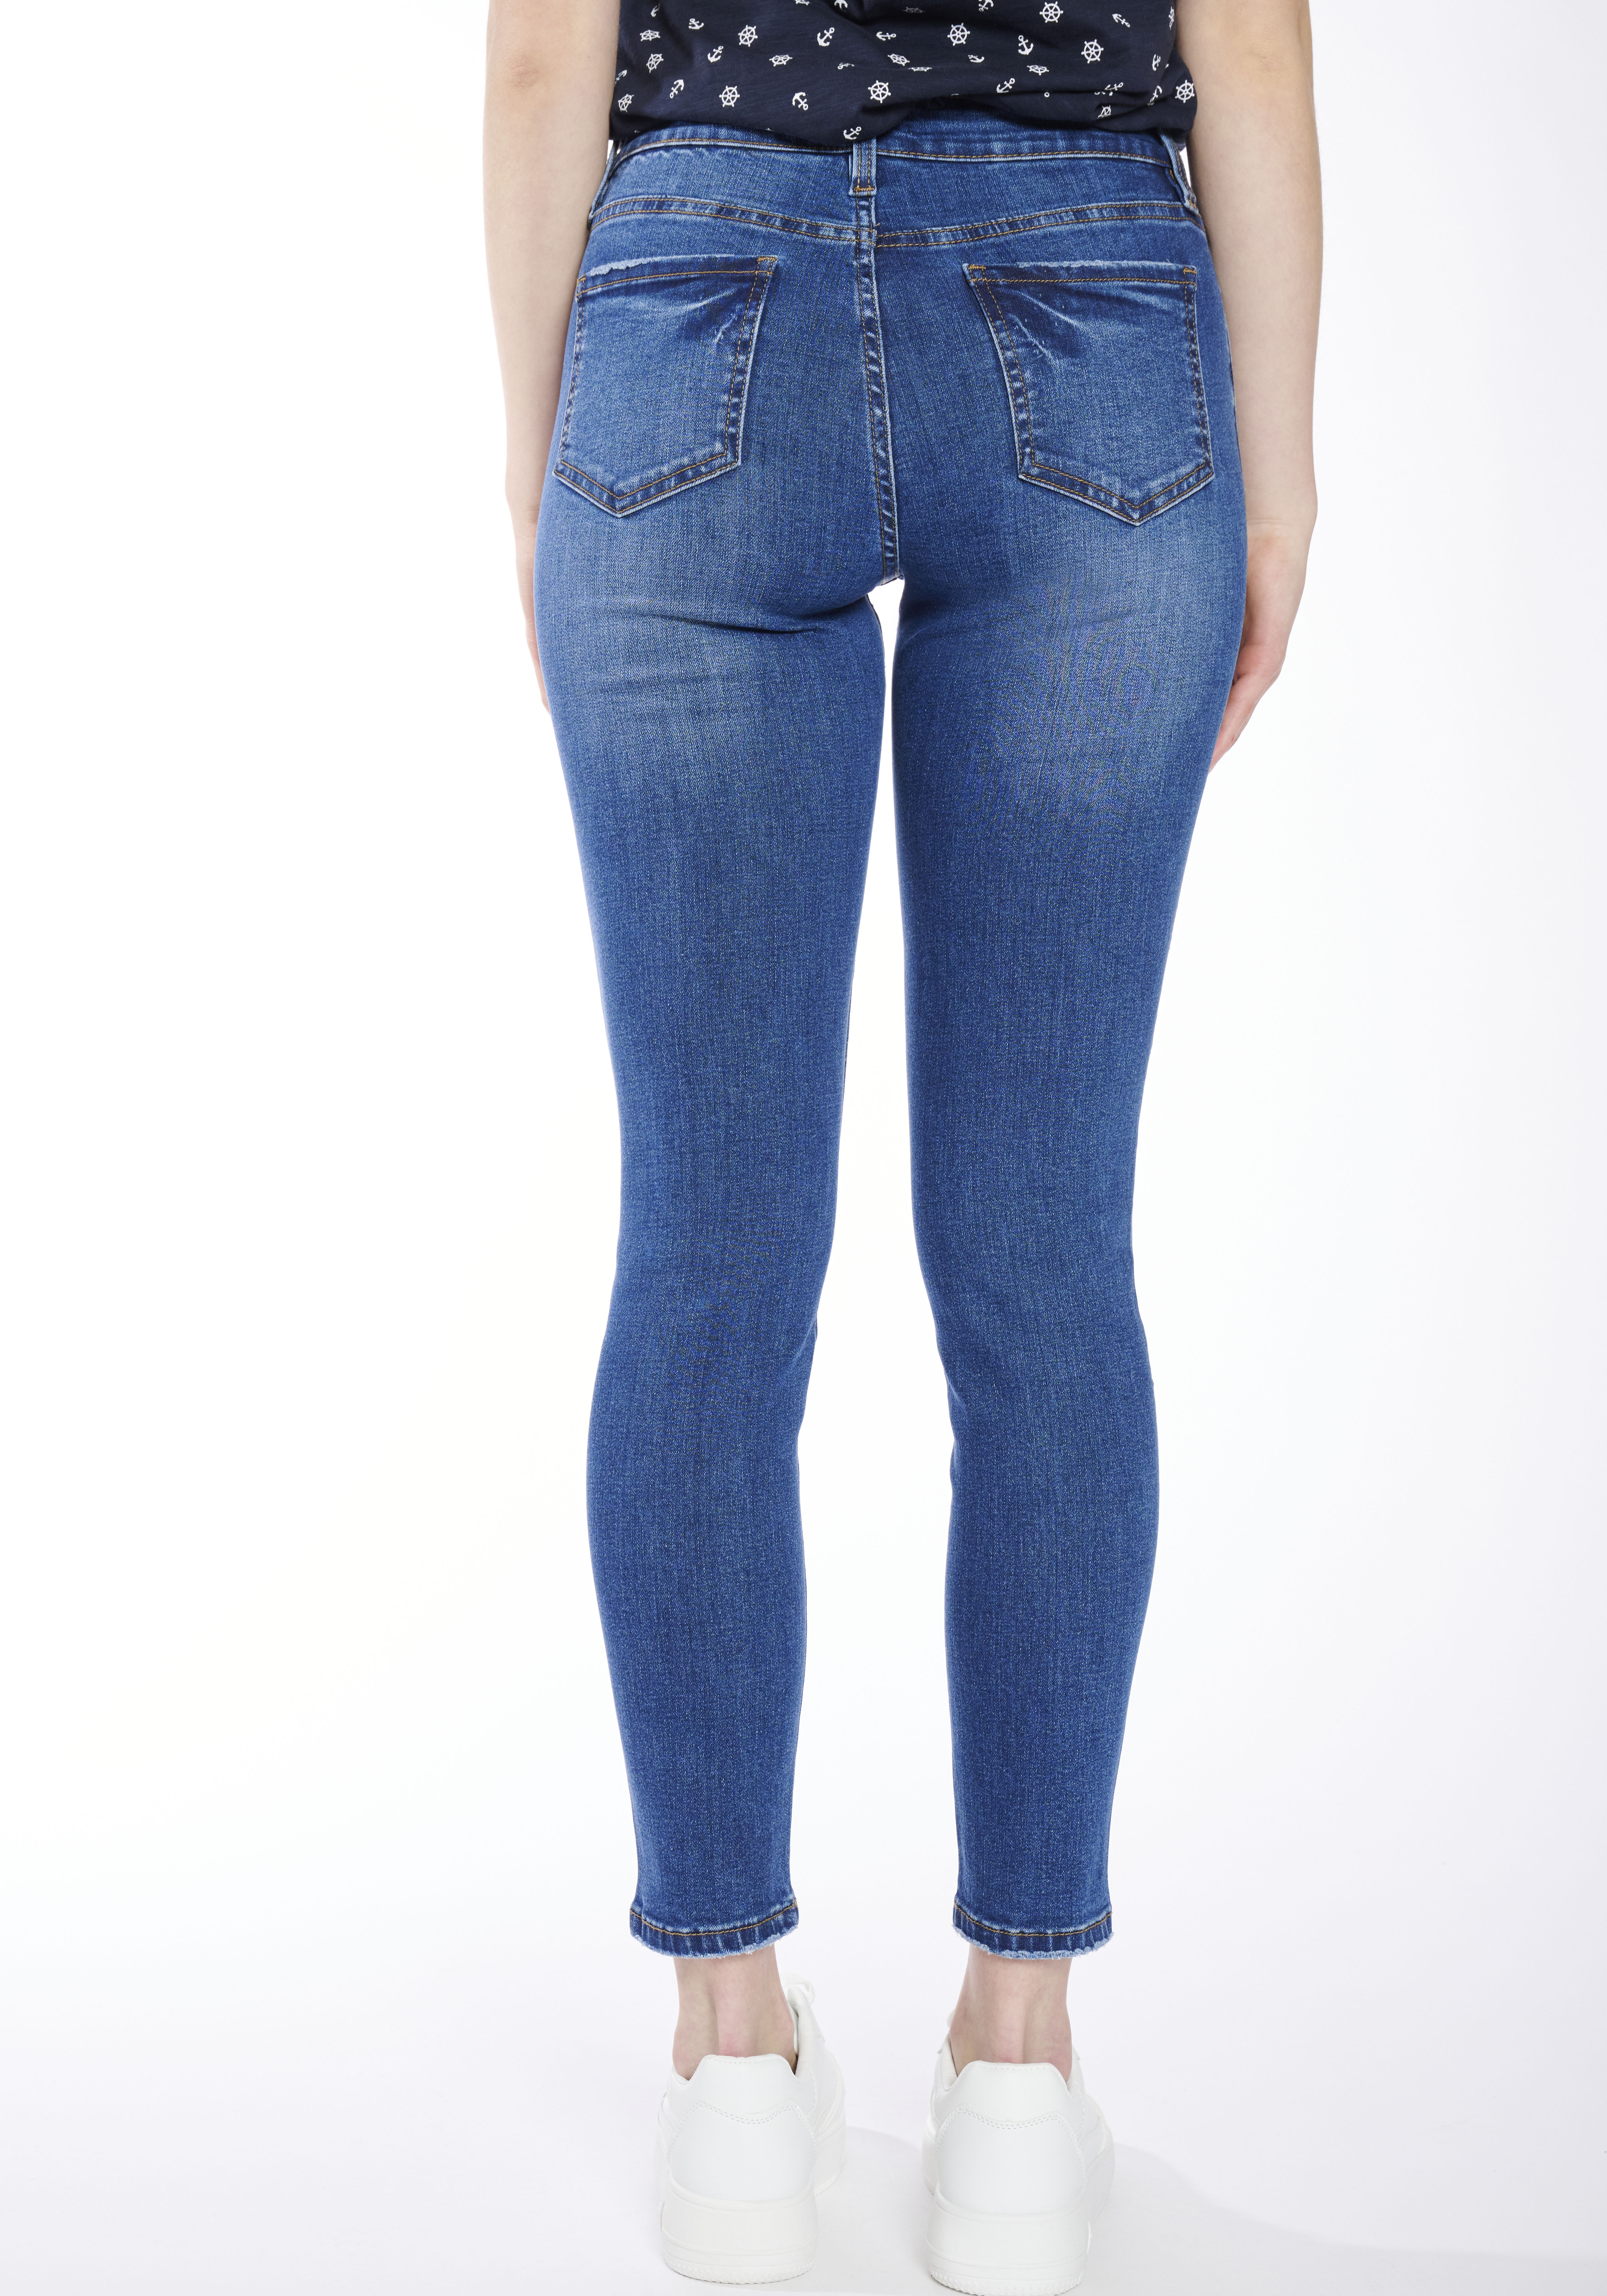 HaILY’S 5-Pocket-Jeans "LG HW C JN Be44lla" günstig online kaufen